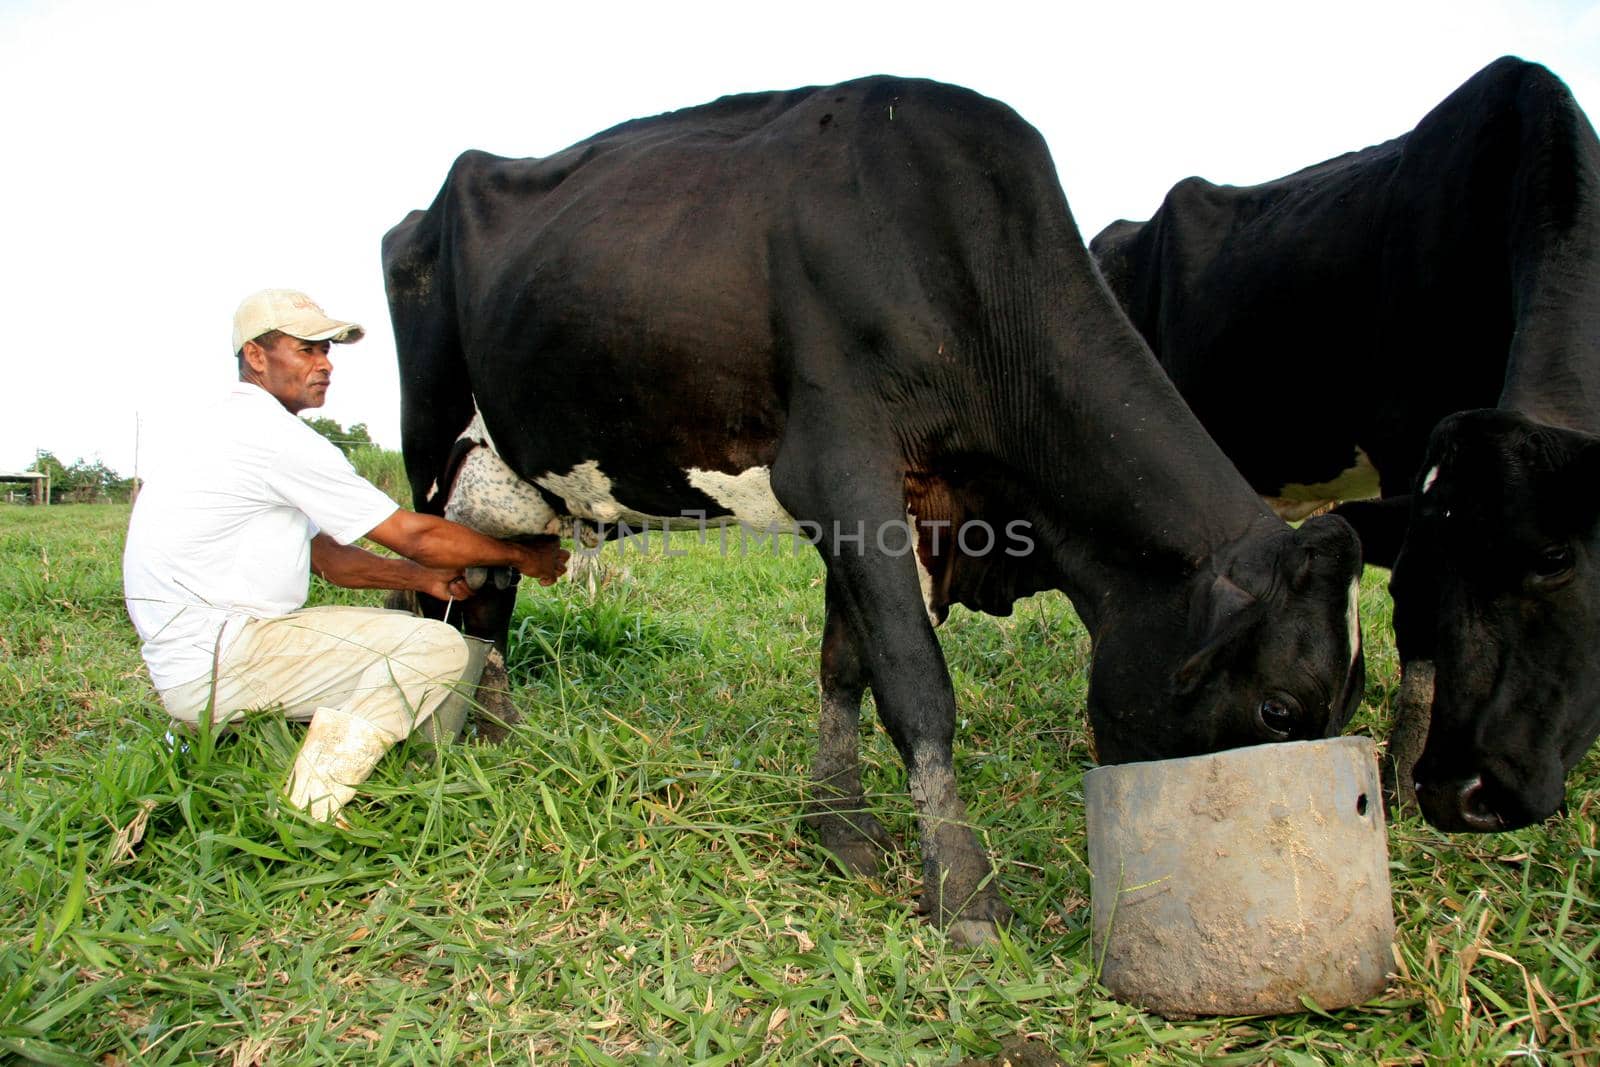 eunapolis, bahia / brazil - may 11, 2009: Reginaldo Silva, a farmer, is seen doing manual milking on his farm in Eunapolis.